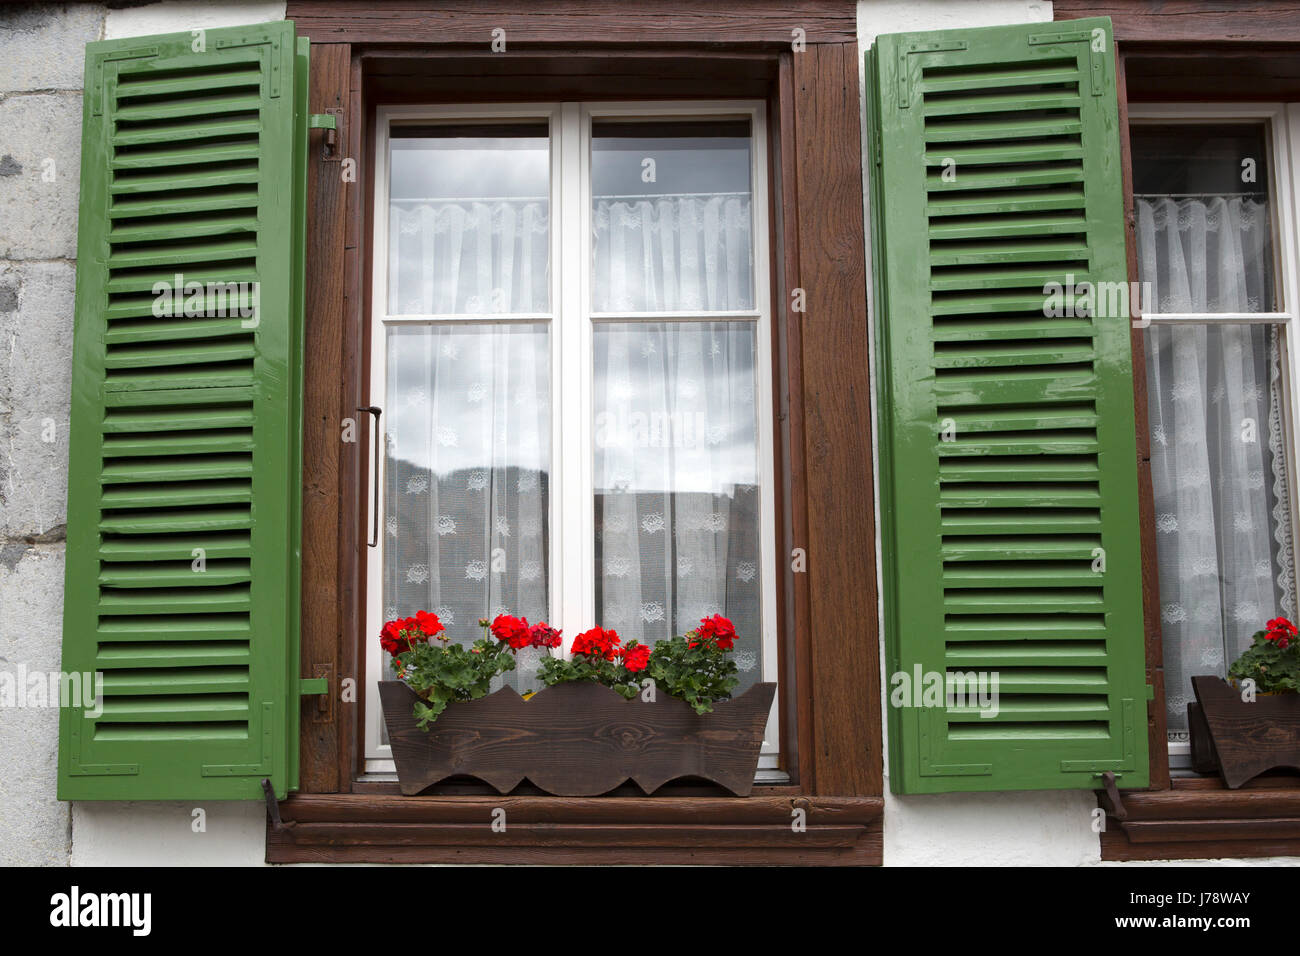 Green shutters at Unterssen in Switzerland. The window has a flower box. Stock Photo